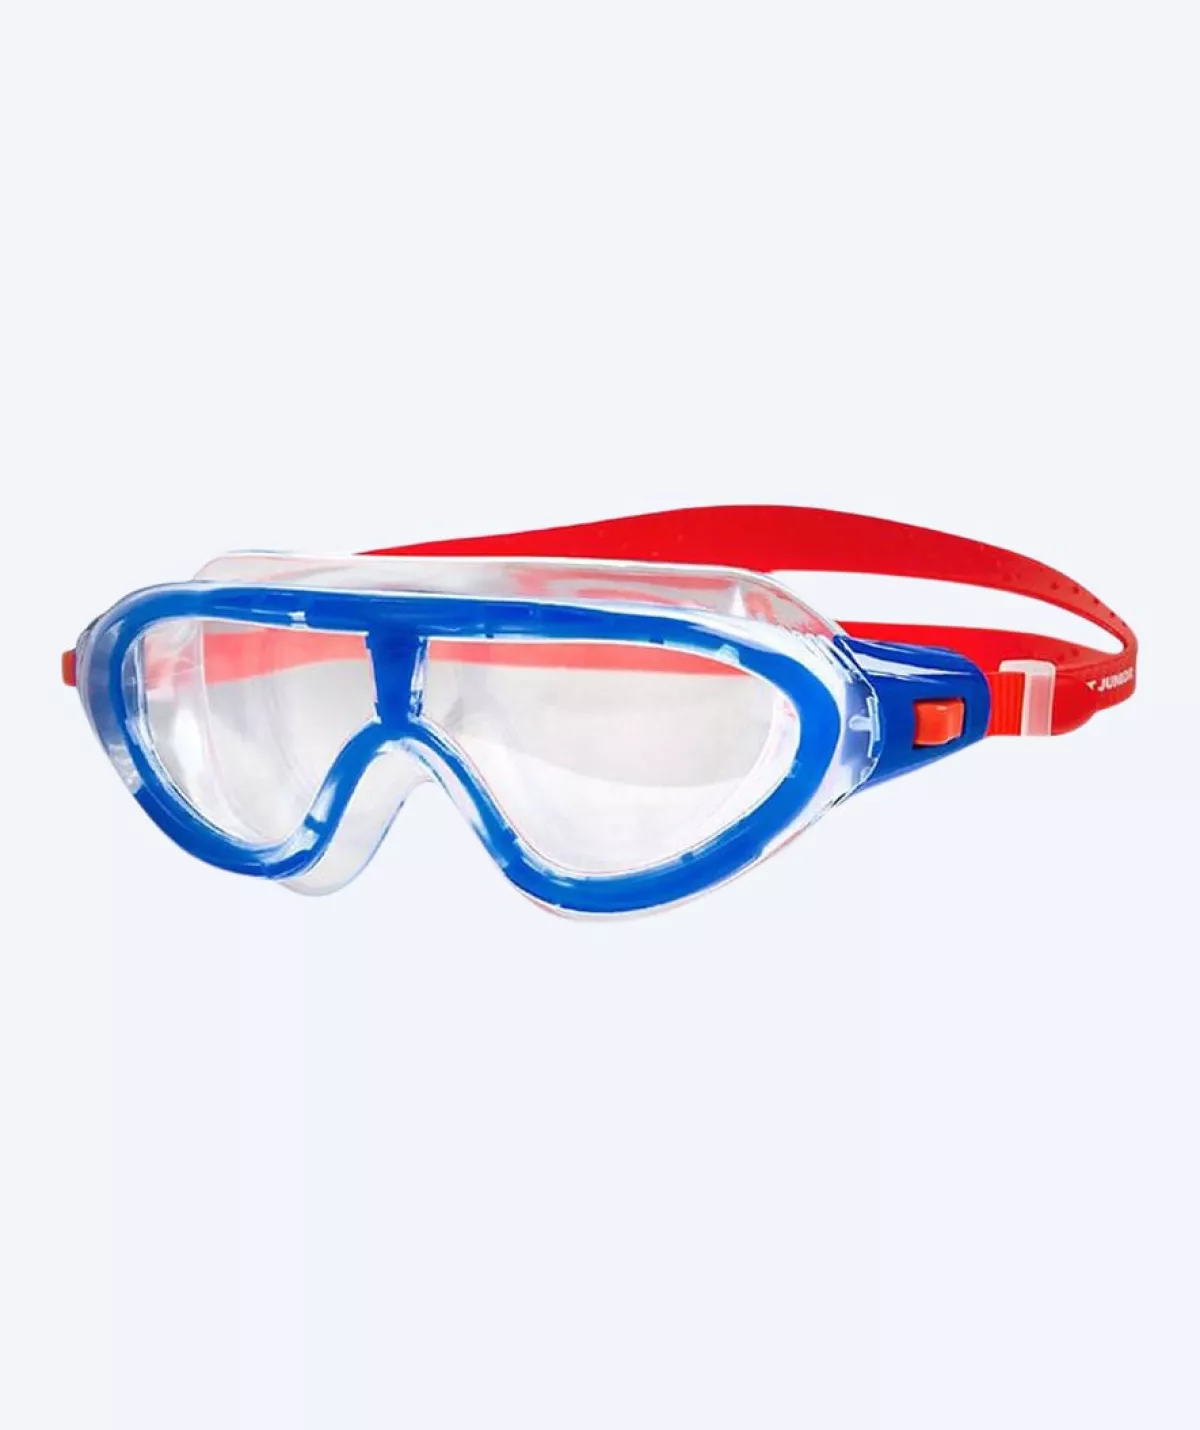 #1 - Speedo dykkerbriller til børn - Rift - Lyseblå m. rød elastik (Klar glas)